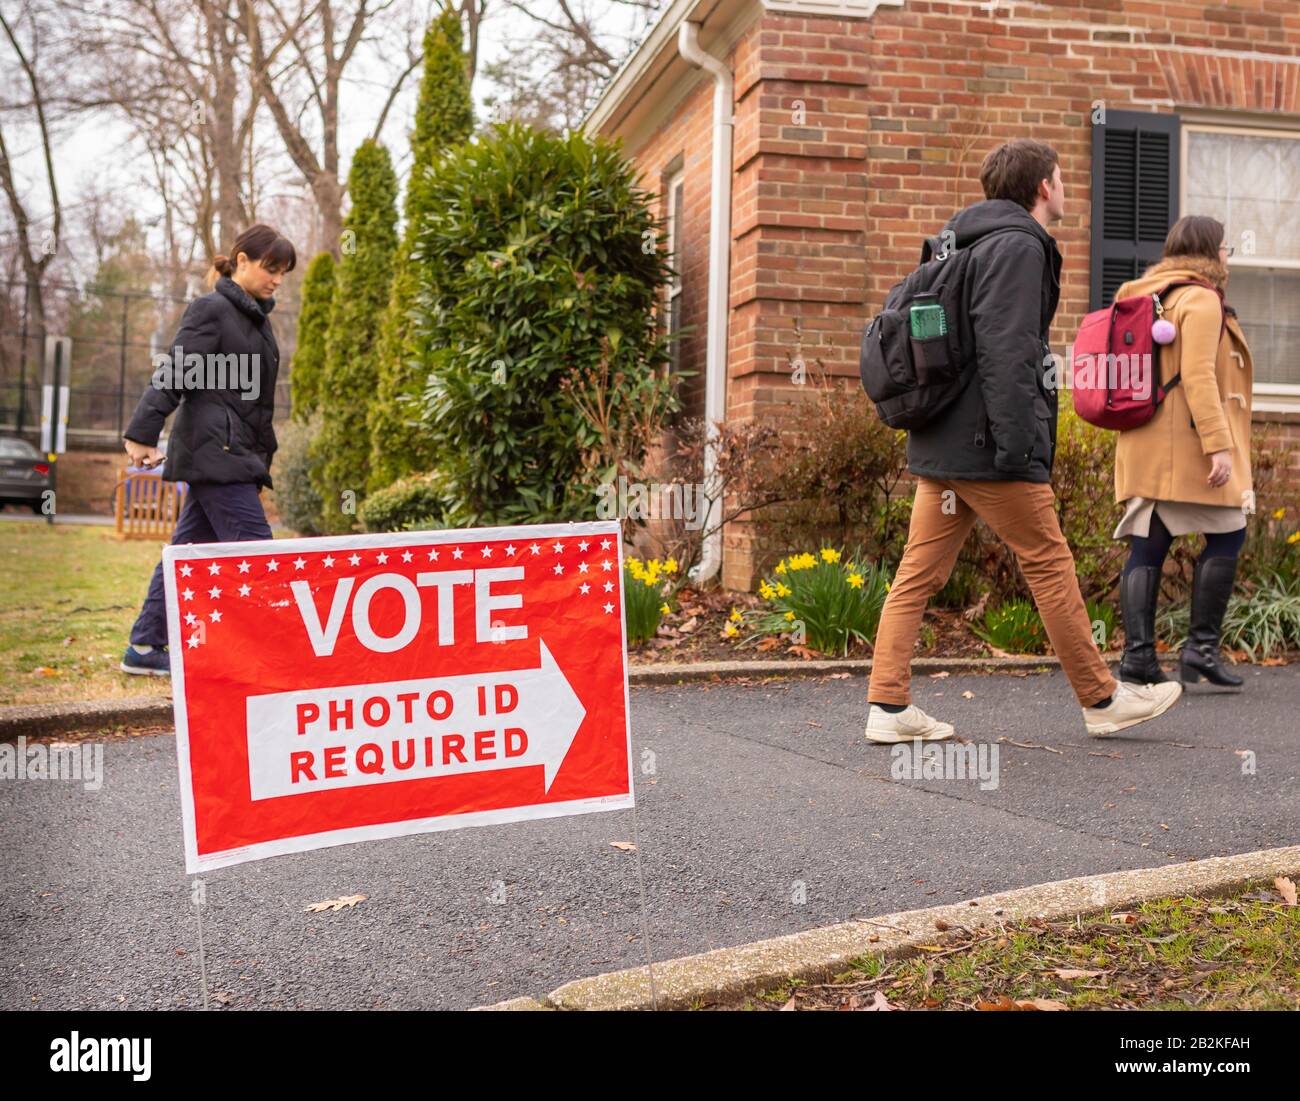 ARLINGTON, VIRGINIA, USA - MARCH 3, 2020: Democratic primary election voting, Lyon Village polling place. Photo ID sign. Stock Photo